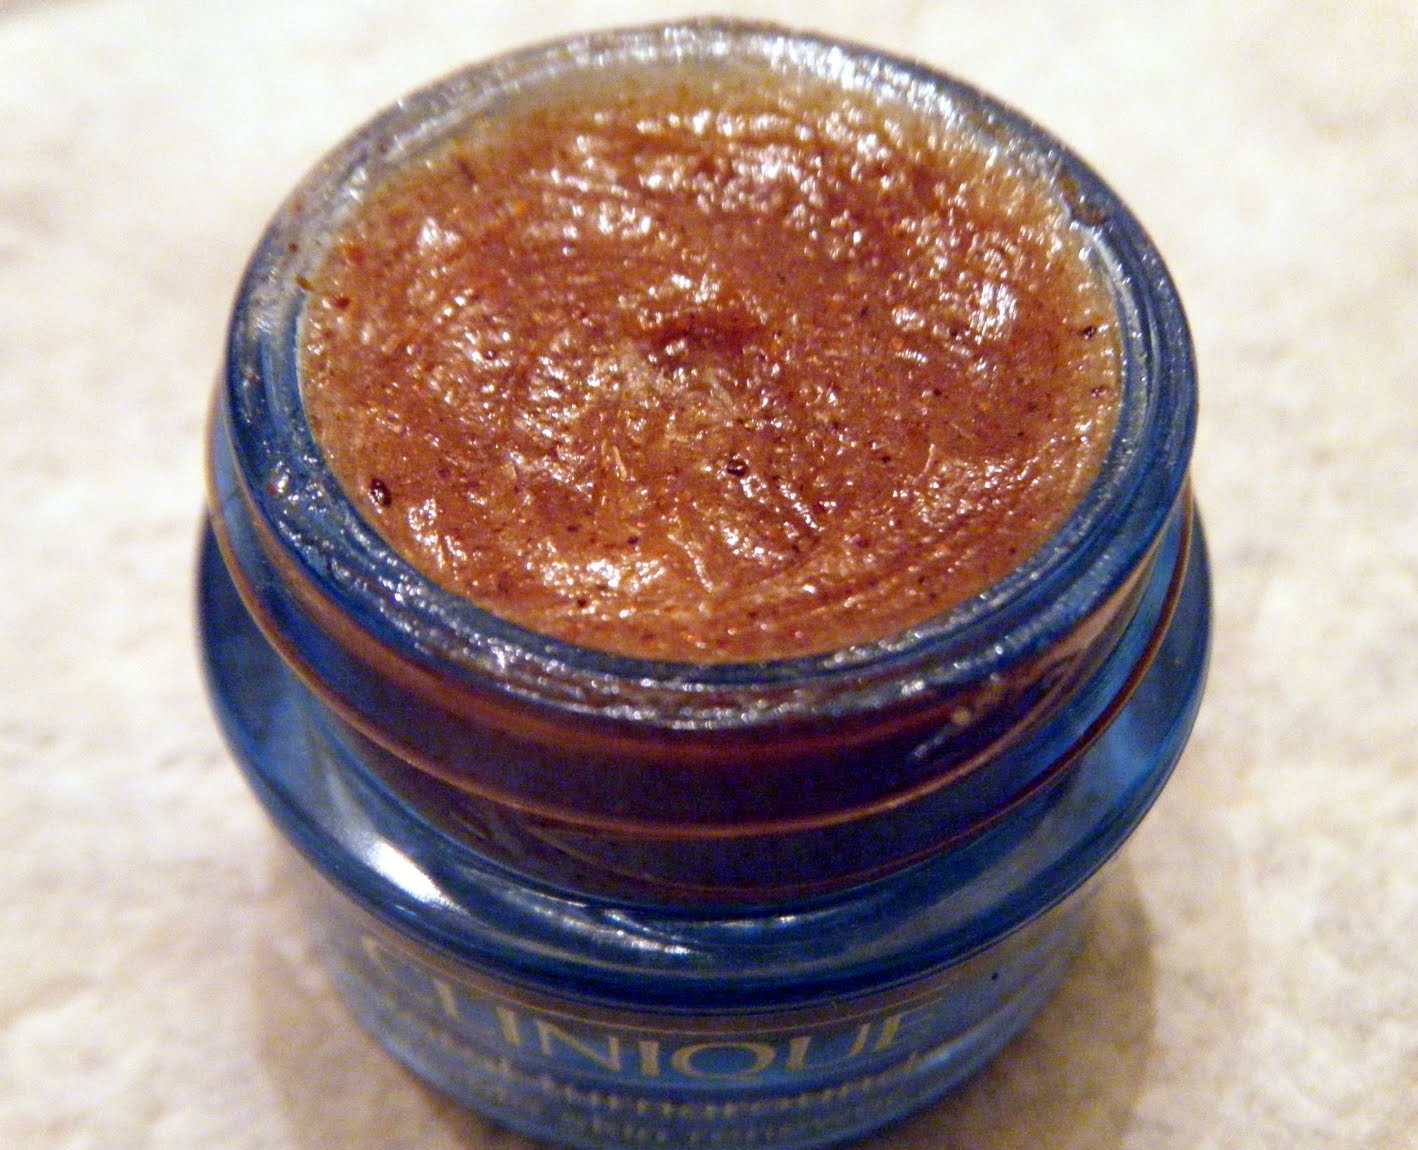 Cinnamon powder and Vaseline mixture for fuller lips